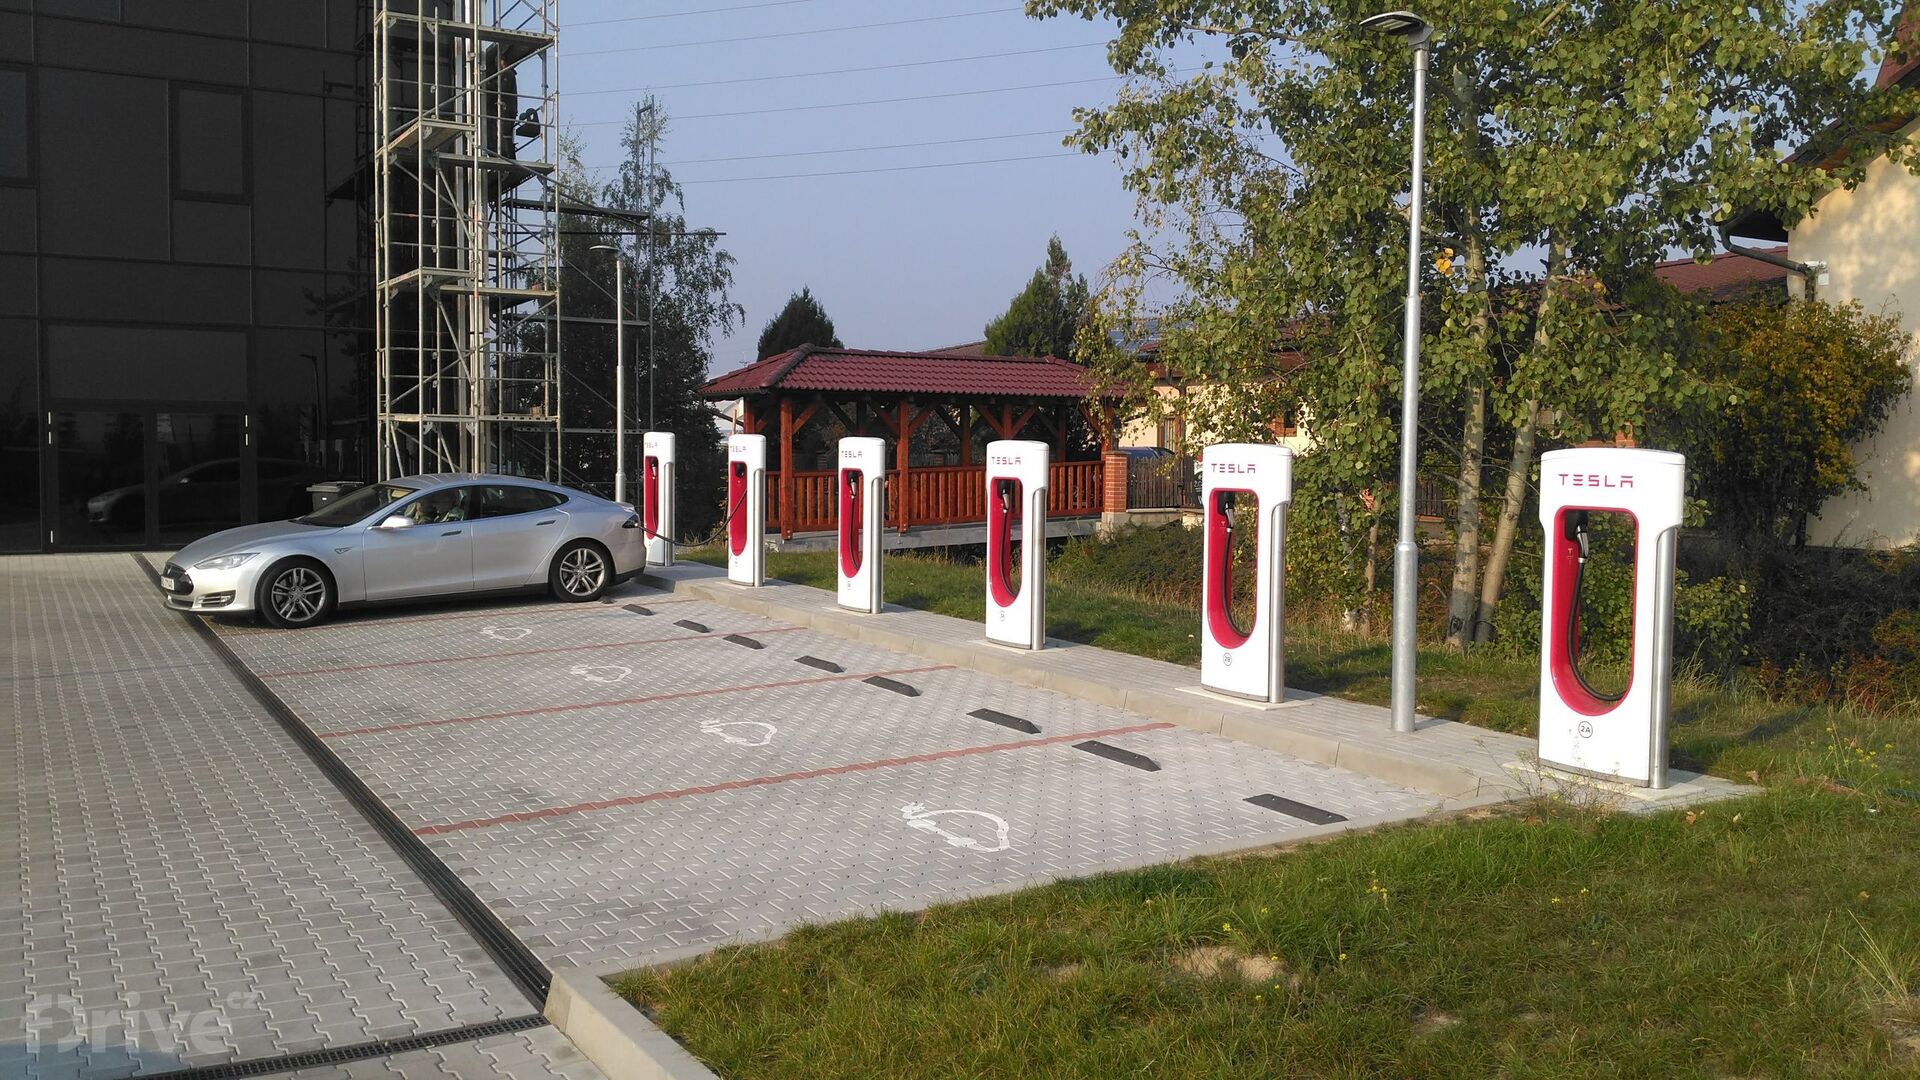 Tesla Supercharger, Vestec u Prahy